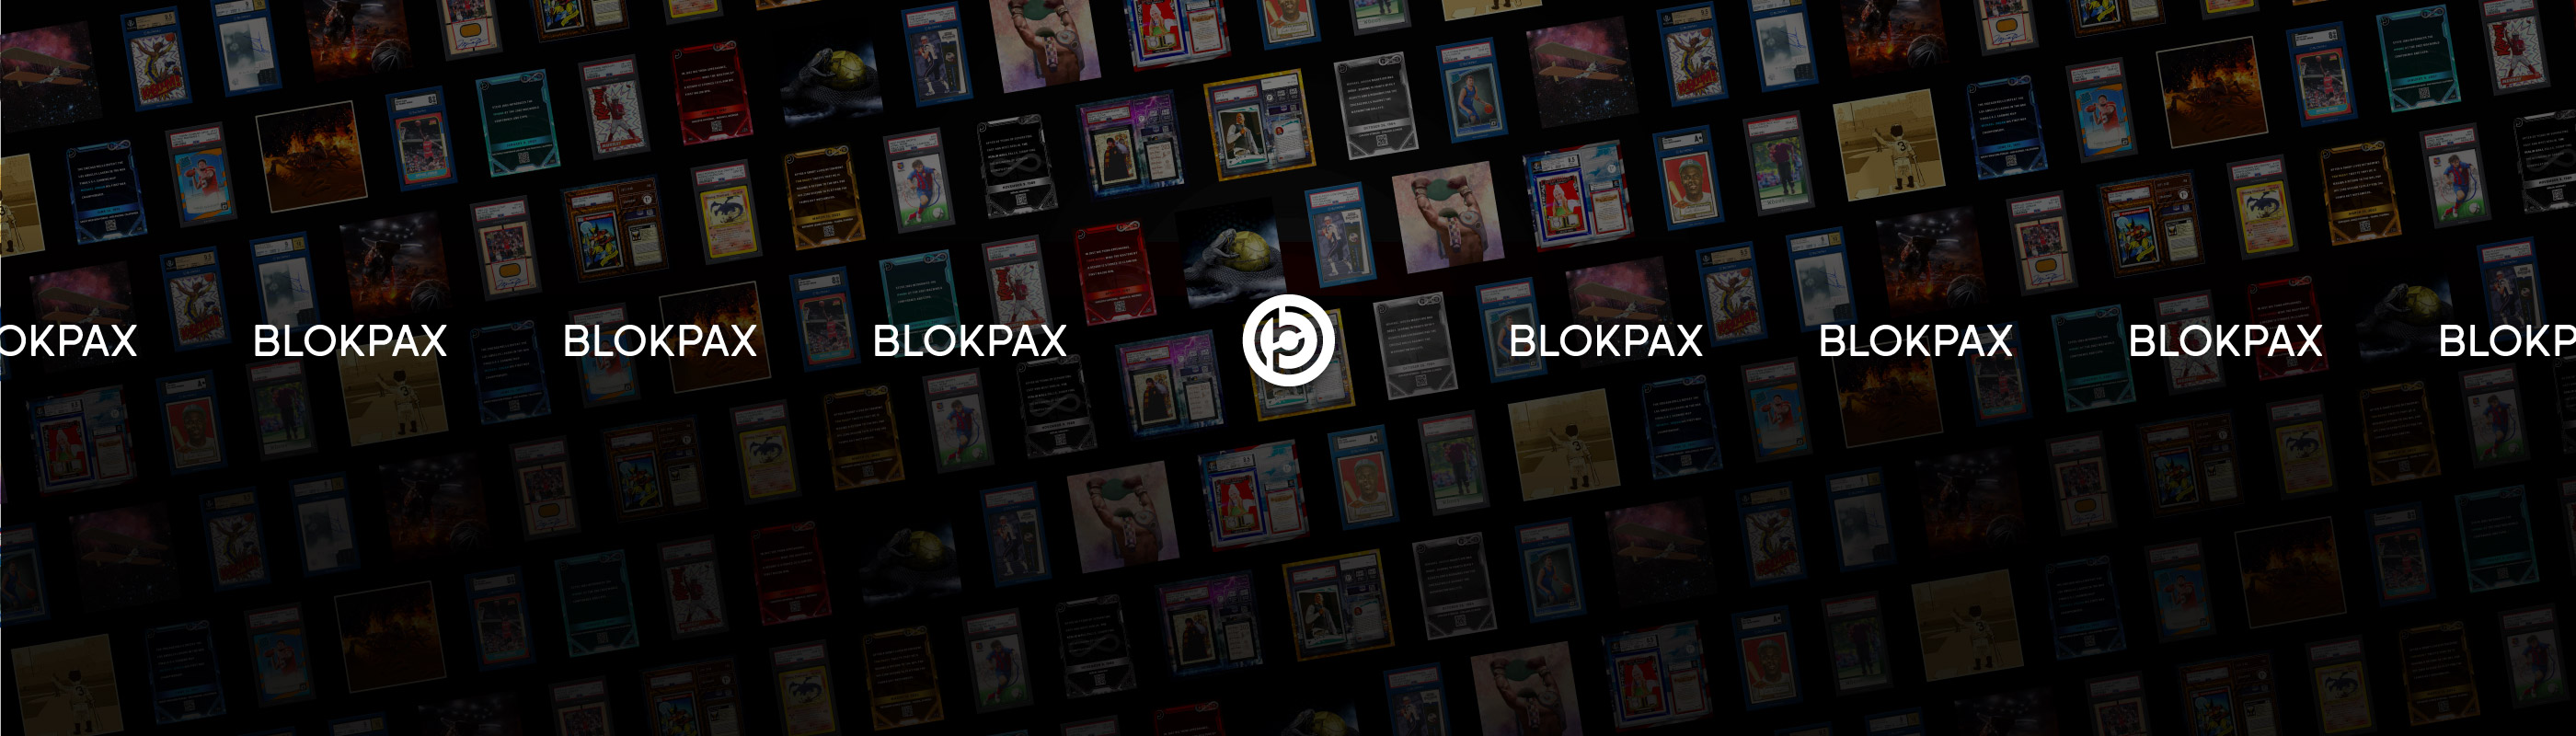 Blokpax banner